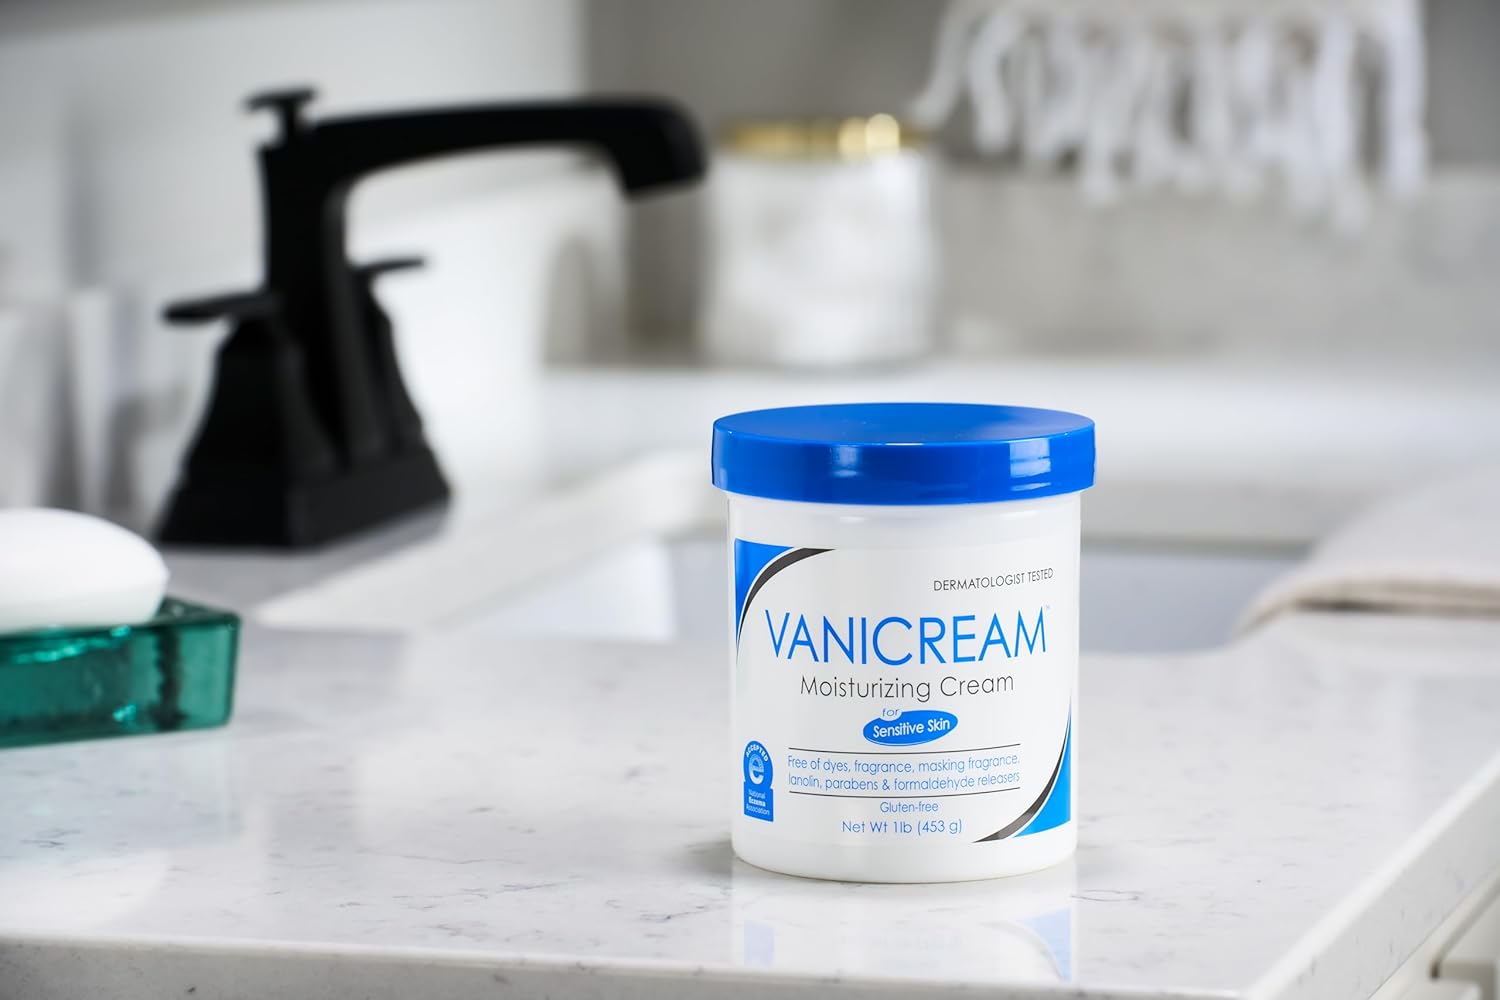 Vanicream Moisturizing Skin Cream with Pump Dispenser - 16 fl oz (1 lb) - Moisturizer Formulated Without Common Irritants for Those with Sensitive Skin